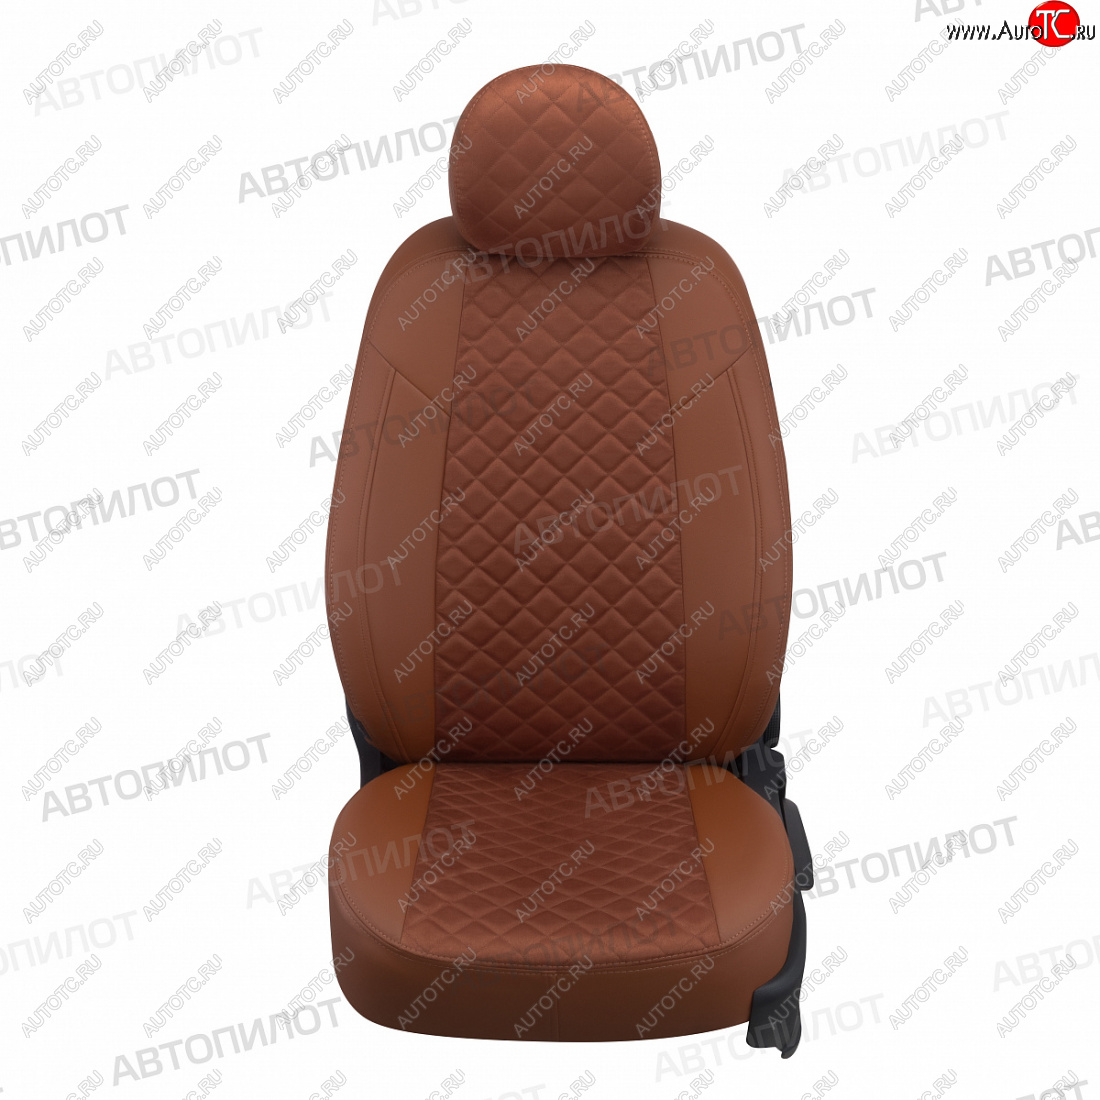 12 199 р. Чехлы сидений (экокожа/алькантара, 8 мест) Автопилот Ромб  Hyundai Staria  US4 (2021-2022) (коричневый)